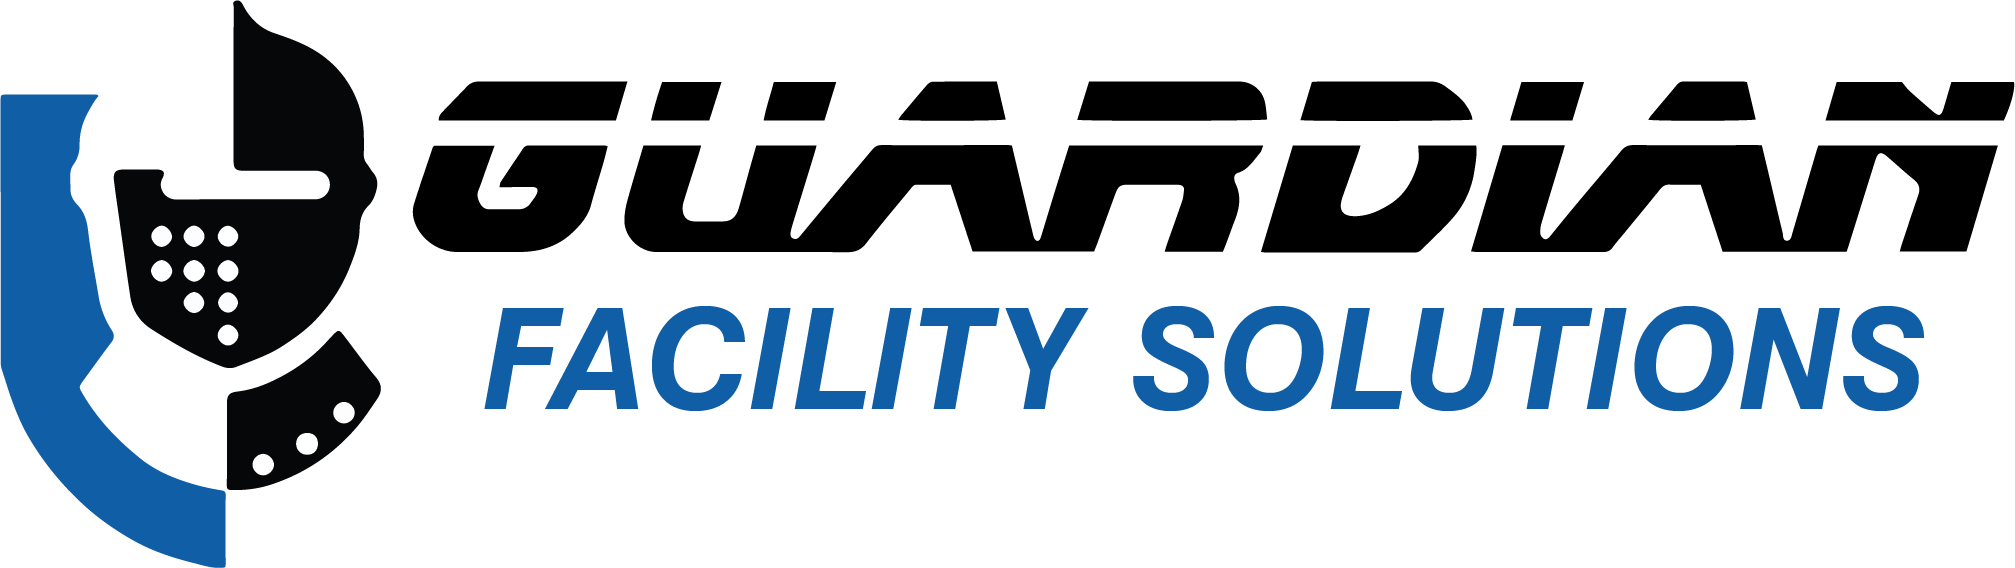 Guardian Facility Solutions Logo